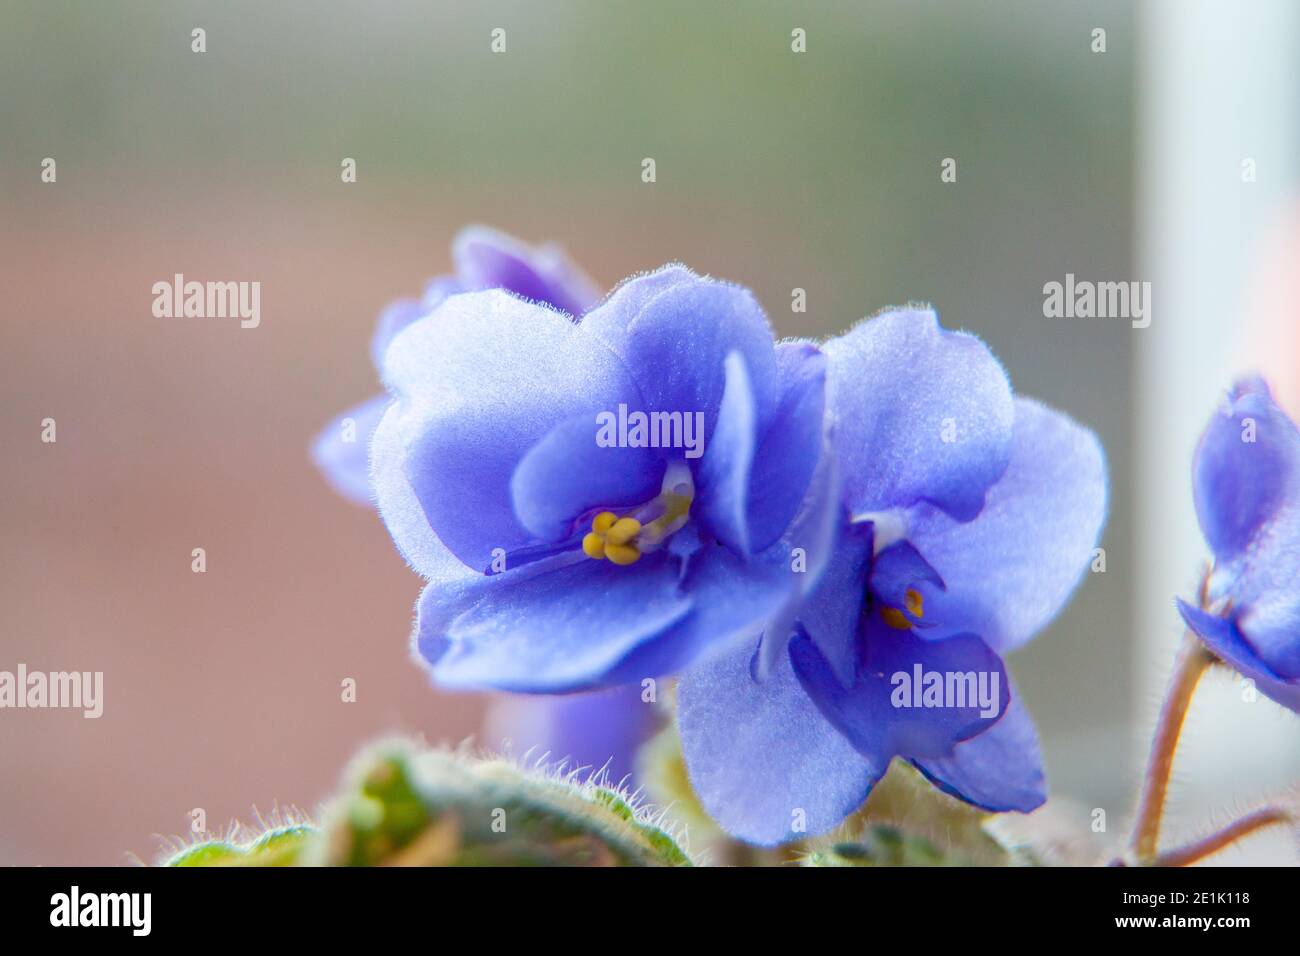 Houseplants, violet flower. Delicate flower close-up. Floral background. Stock Photo